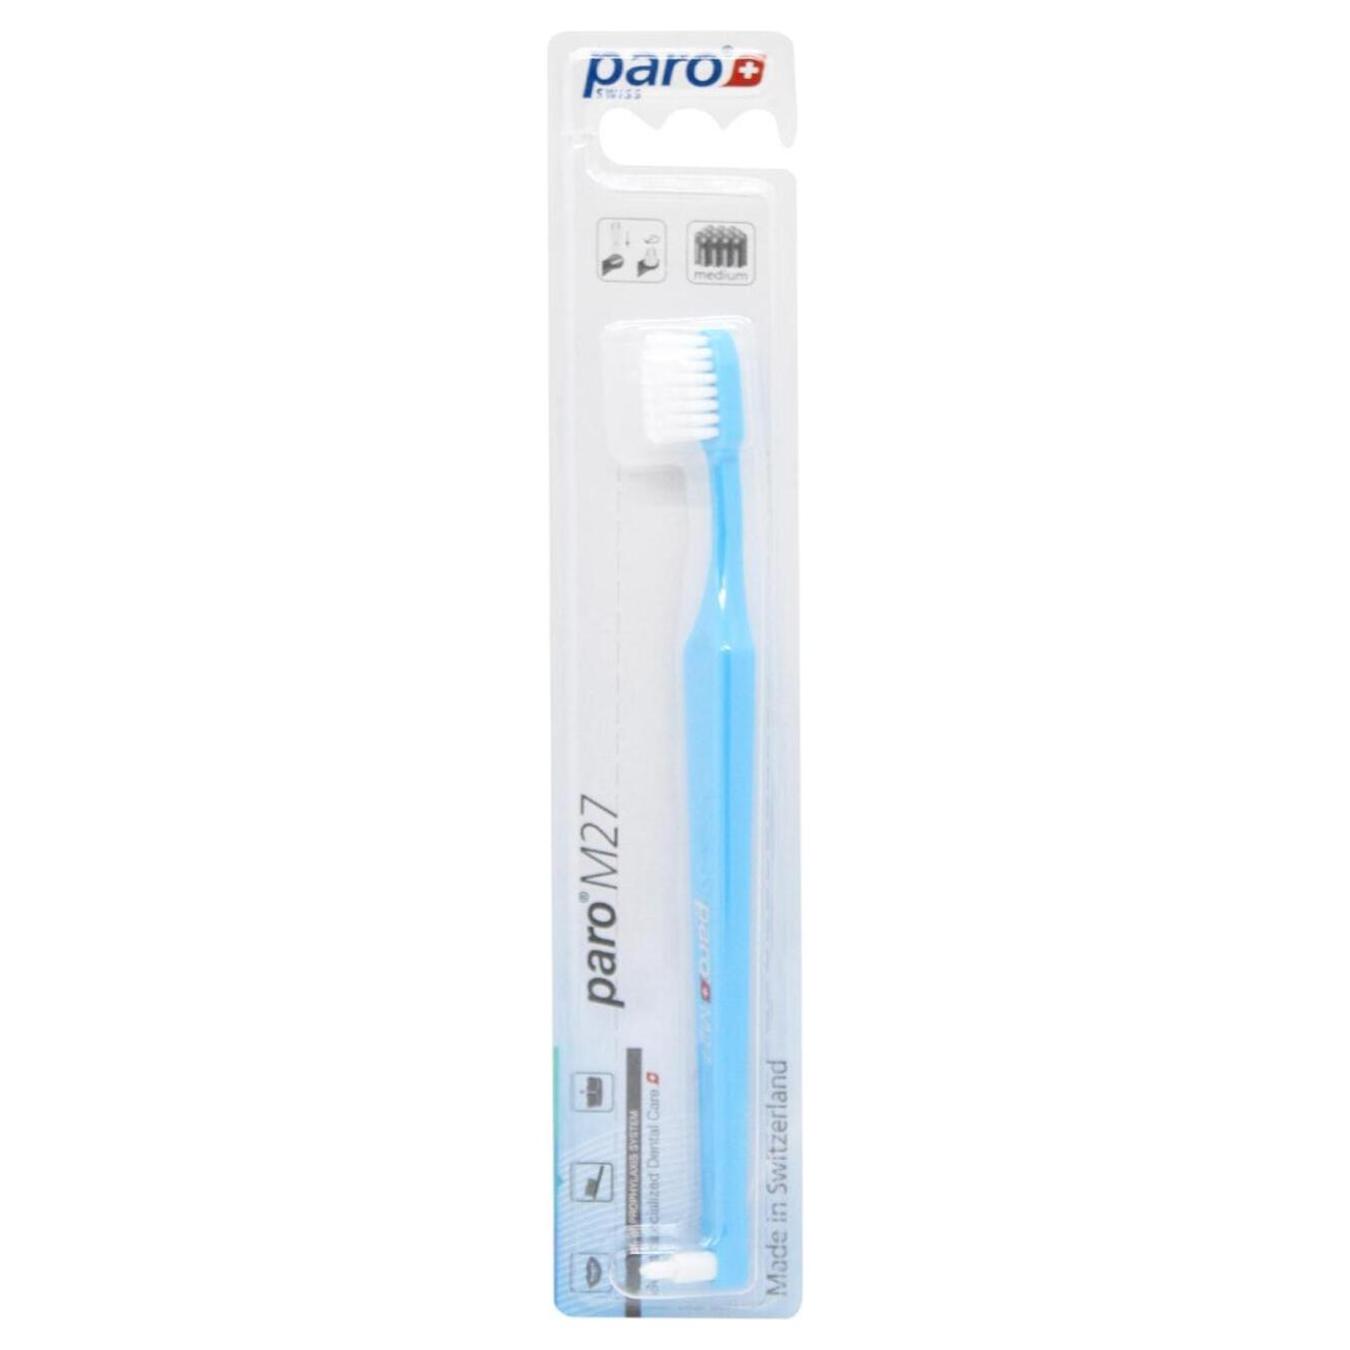 Toothbrush Paro of medium hardness 27 bundles of bristles with a monobundle attachment for children M27 blue